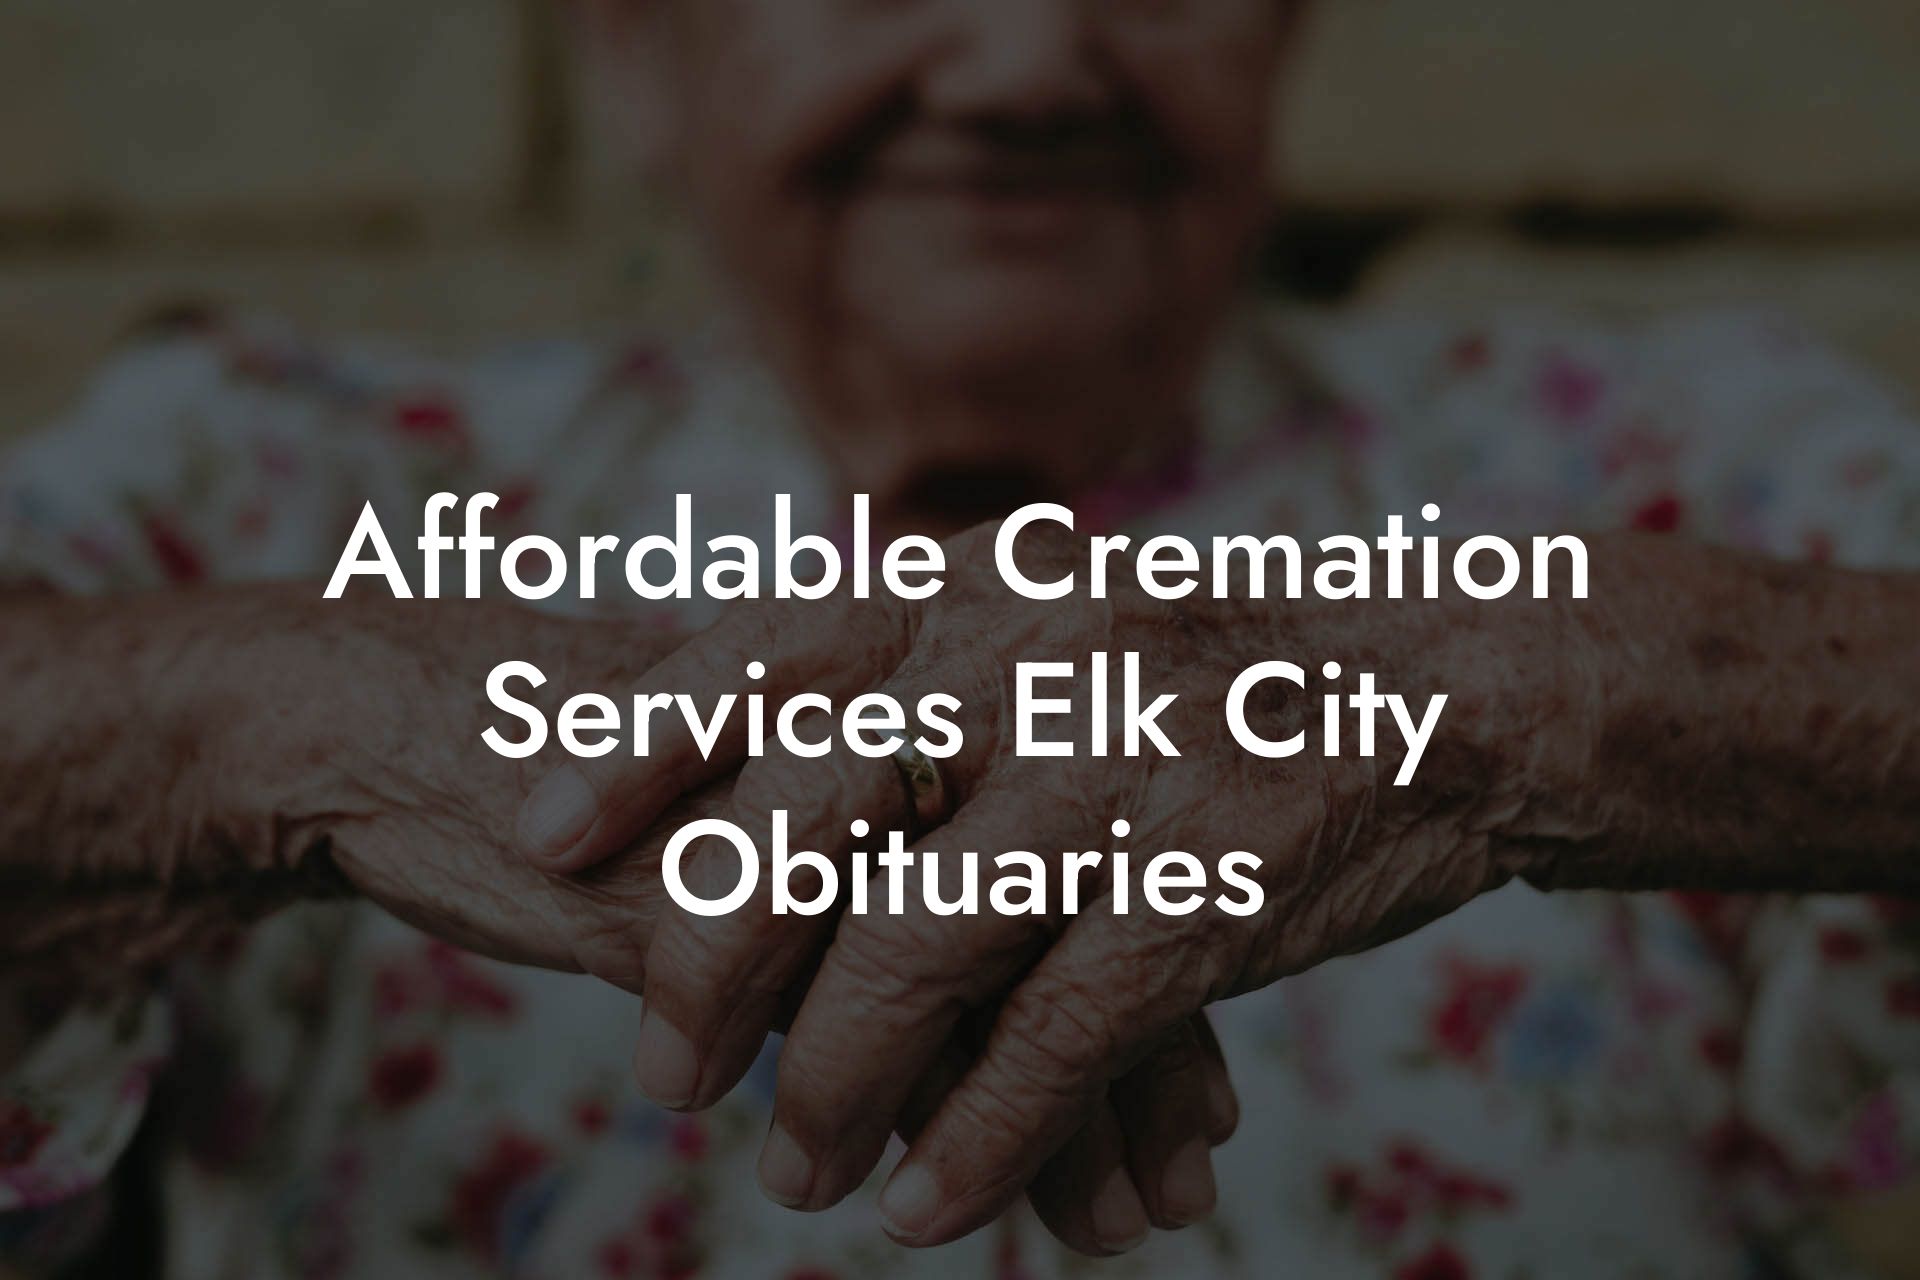 Affordable cremation services elk city obituaries